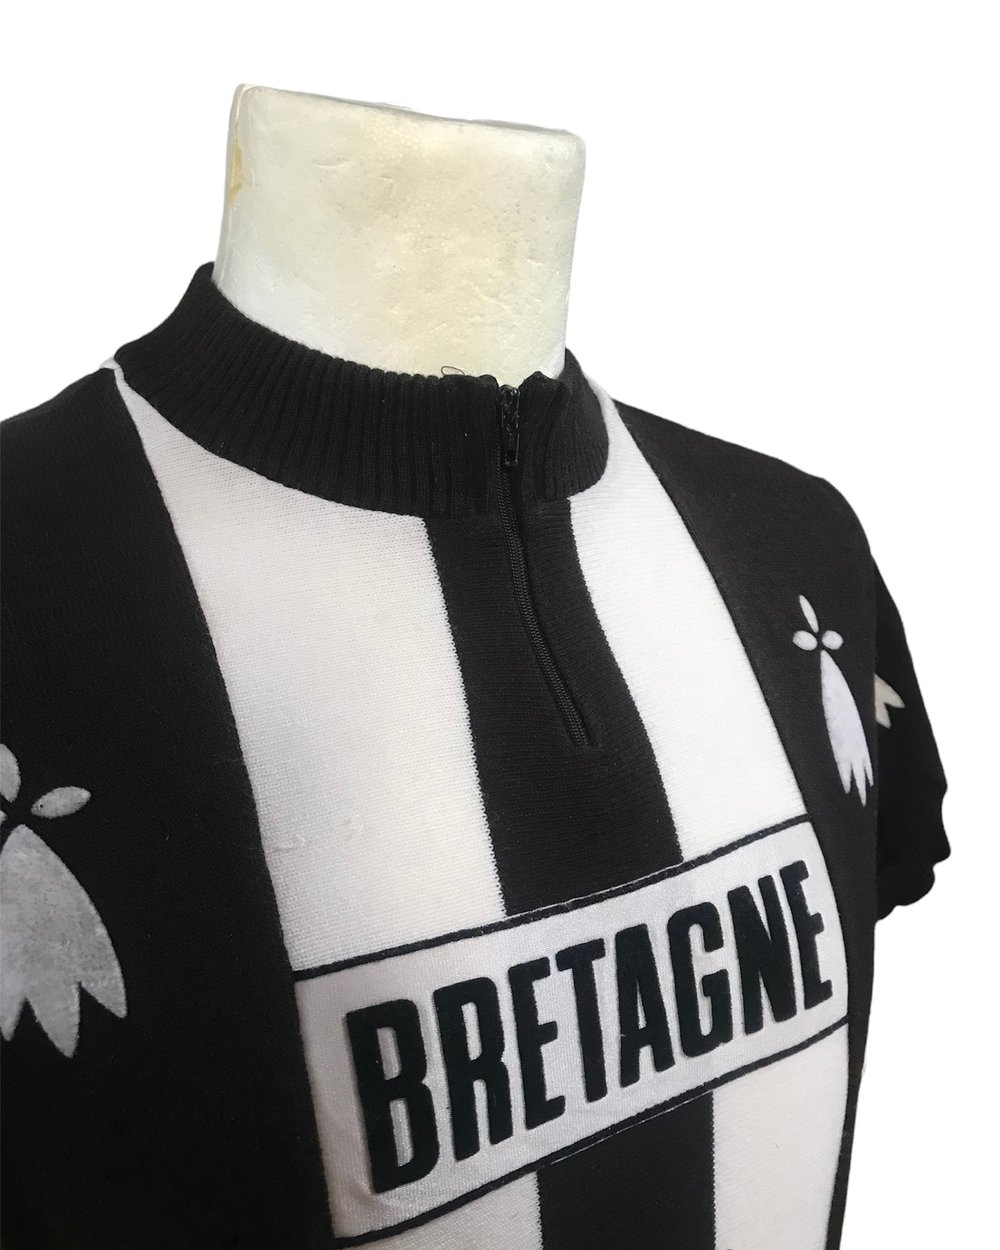 1988 ðŸ‡«ðŸ‡· Amateur Brittany Committee jersey 